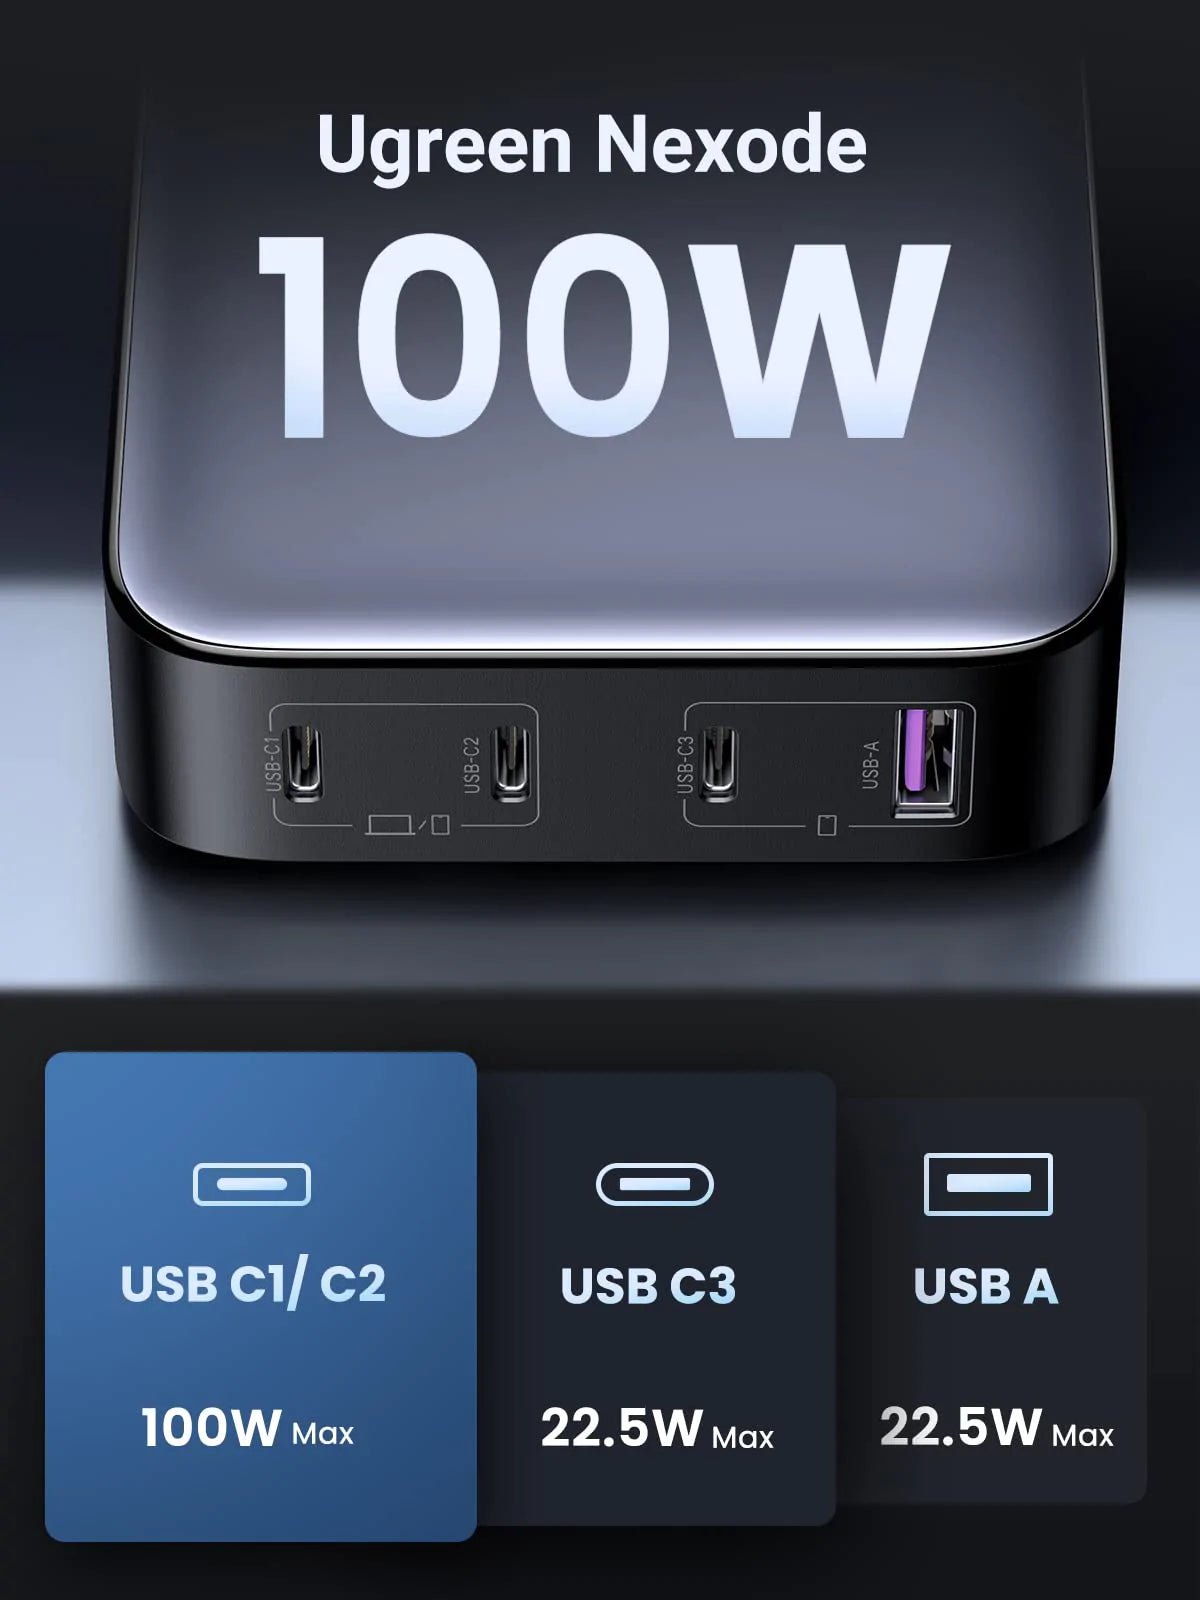 Double chargeur mural USB 17W/3.4A UGREEN pour charger deux appareils